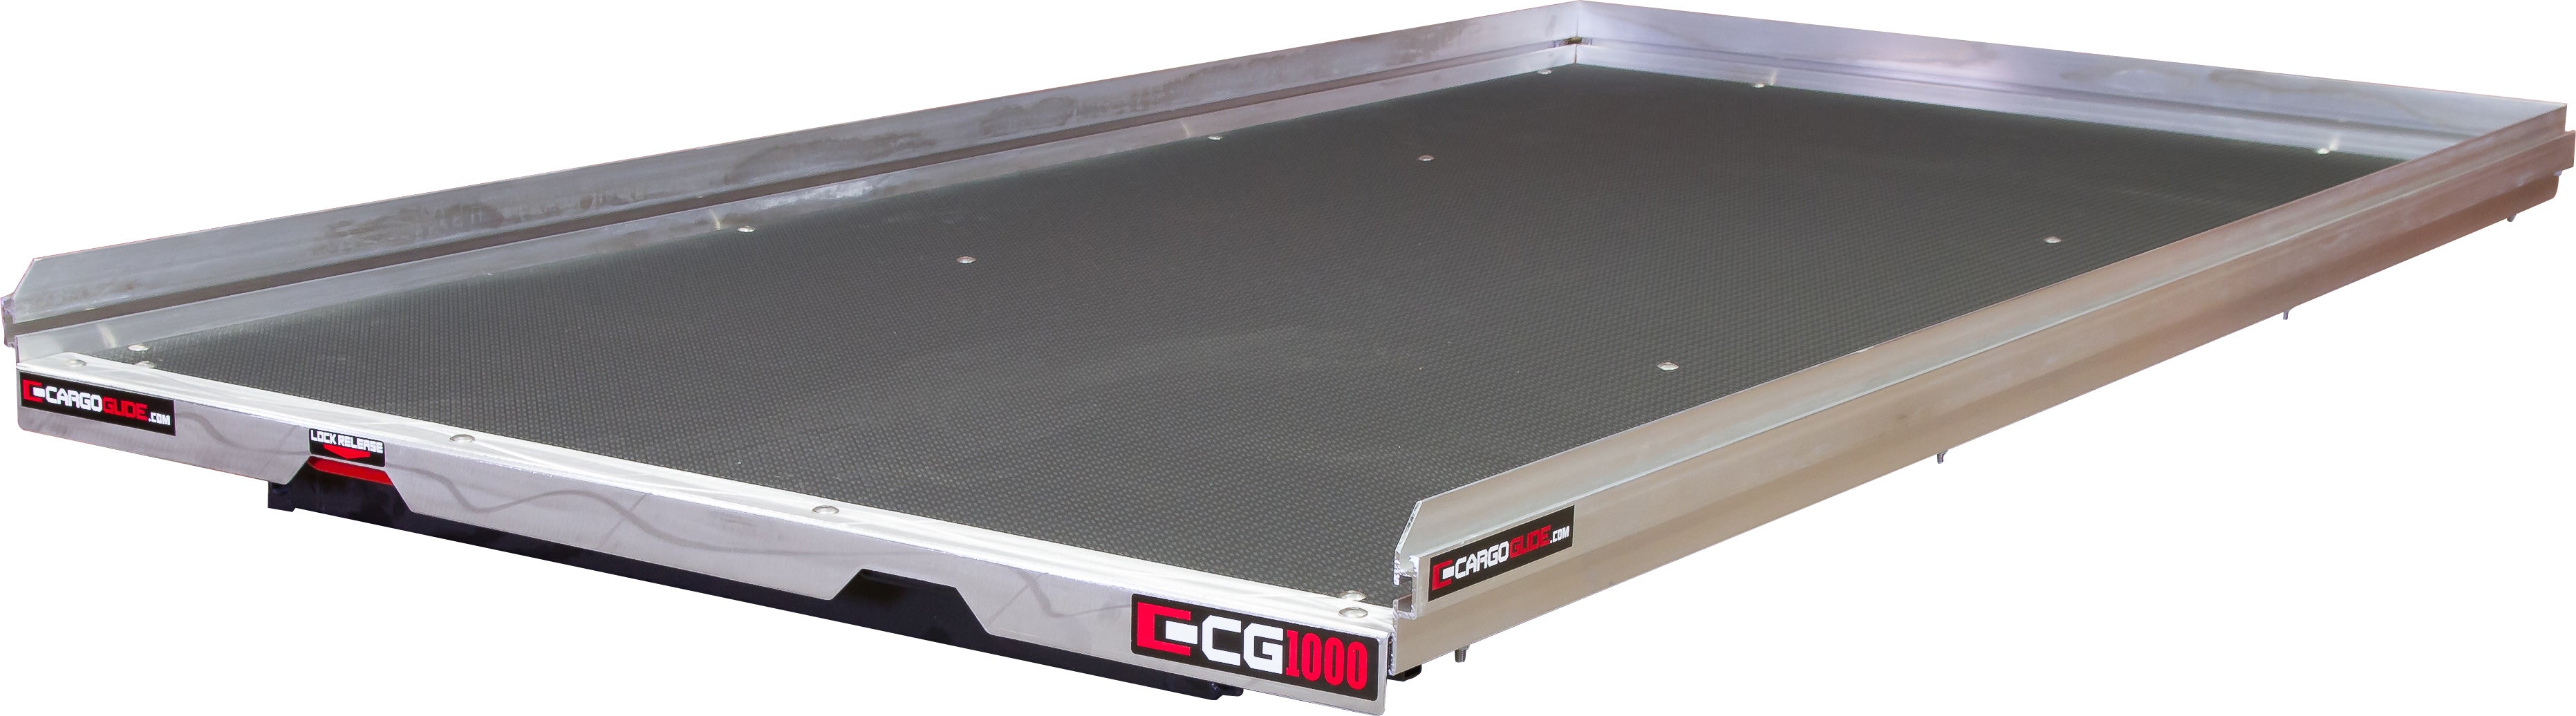 CargoGlide CG1000-8048, Slide Out Cargo Tray - 1000 lb capacity.